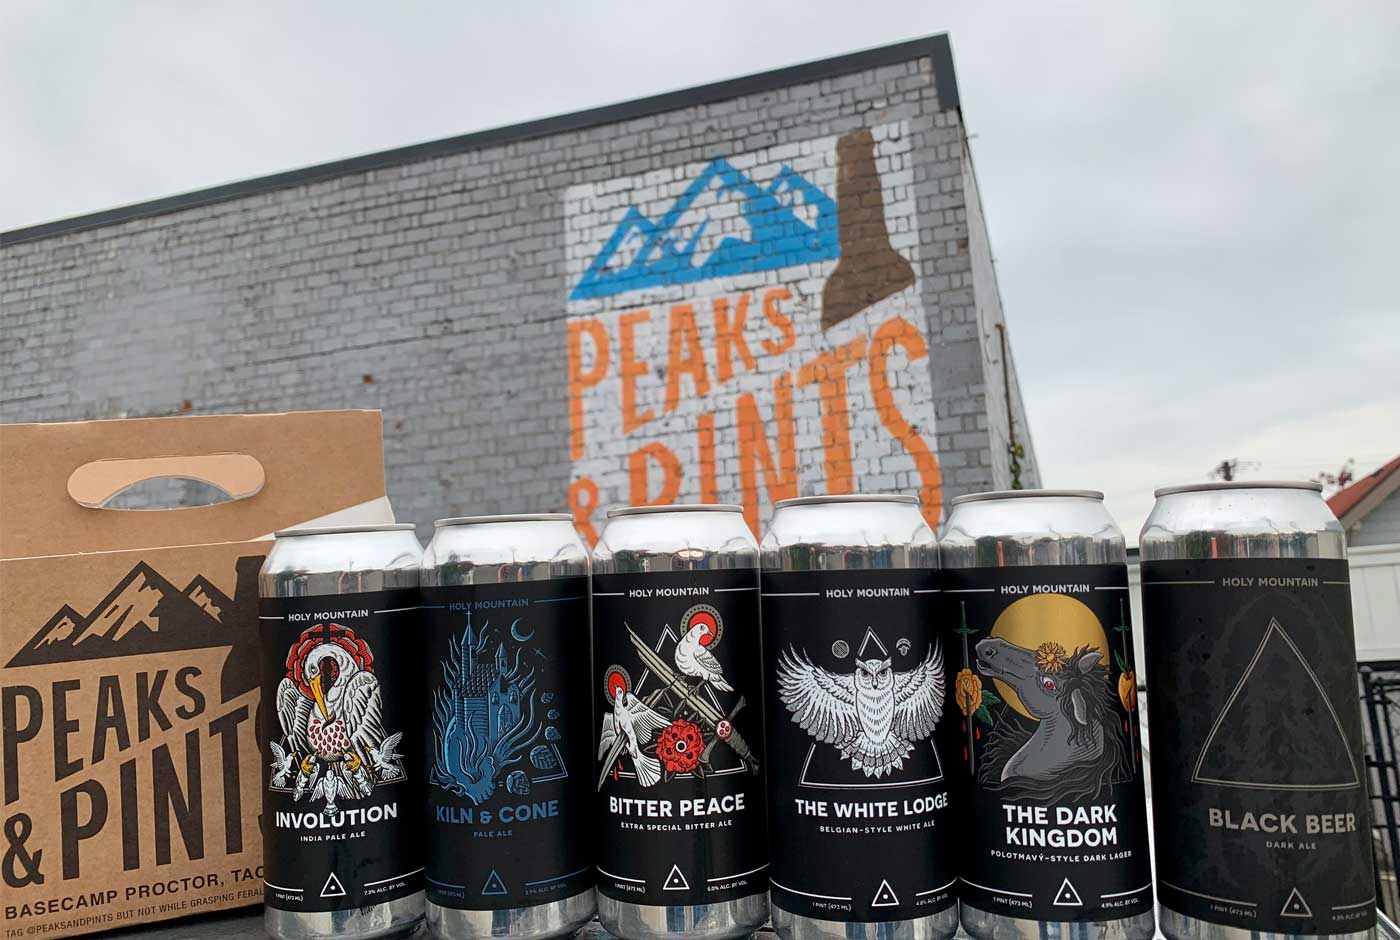 Peaks And Pints Pilot Program Holy Mountain Beer Flight Peaks And Pints Proctor TacomaPeaks